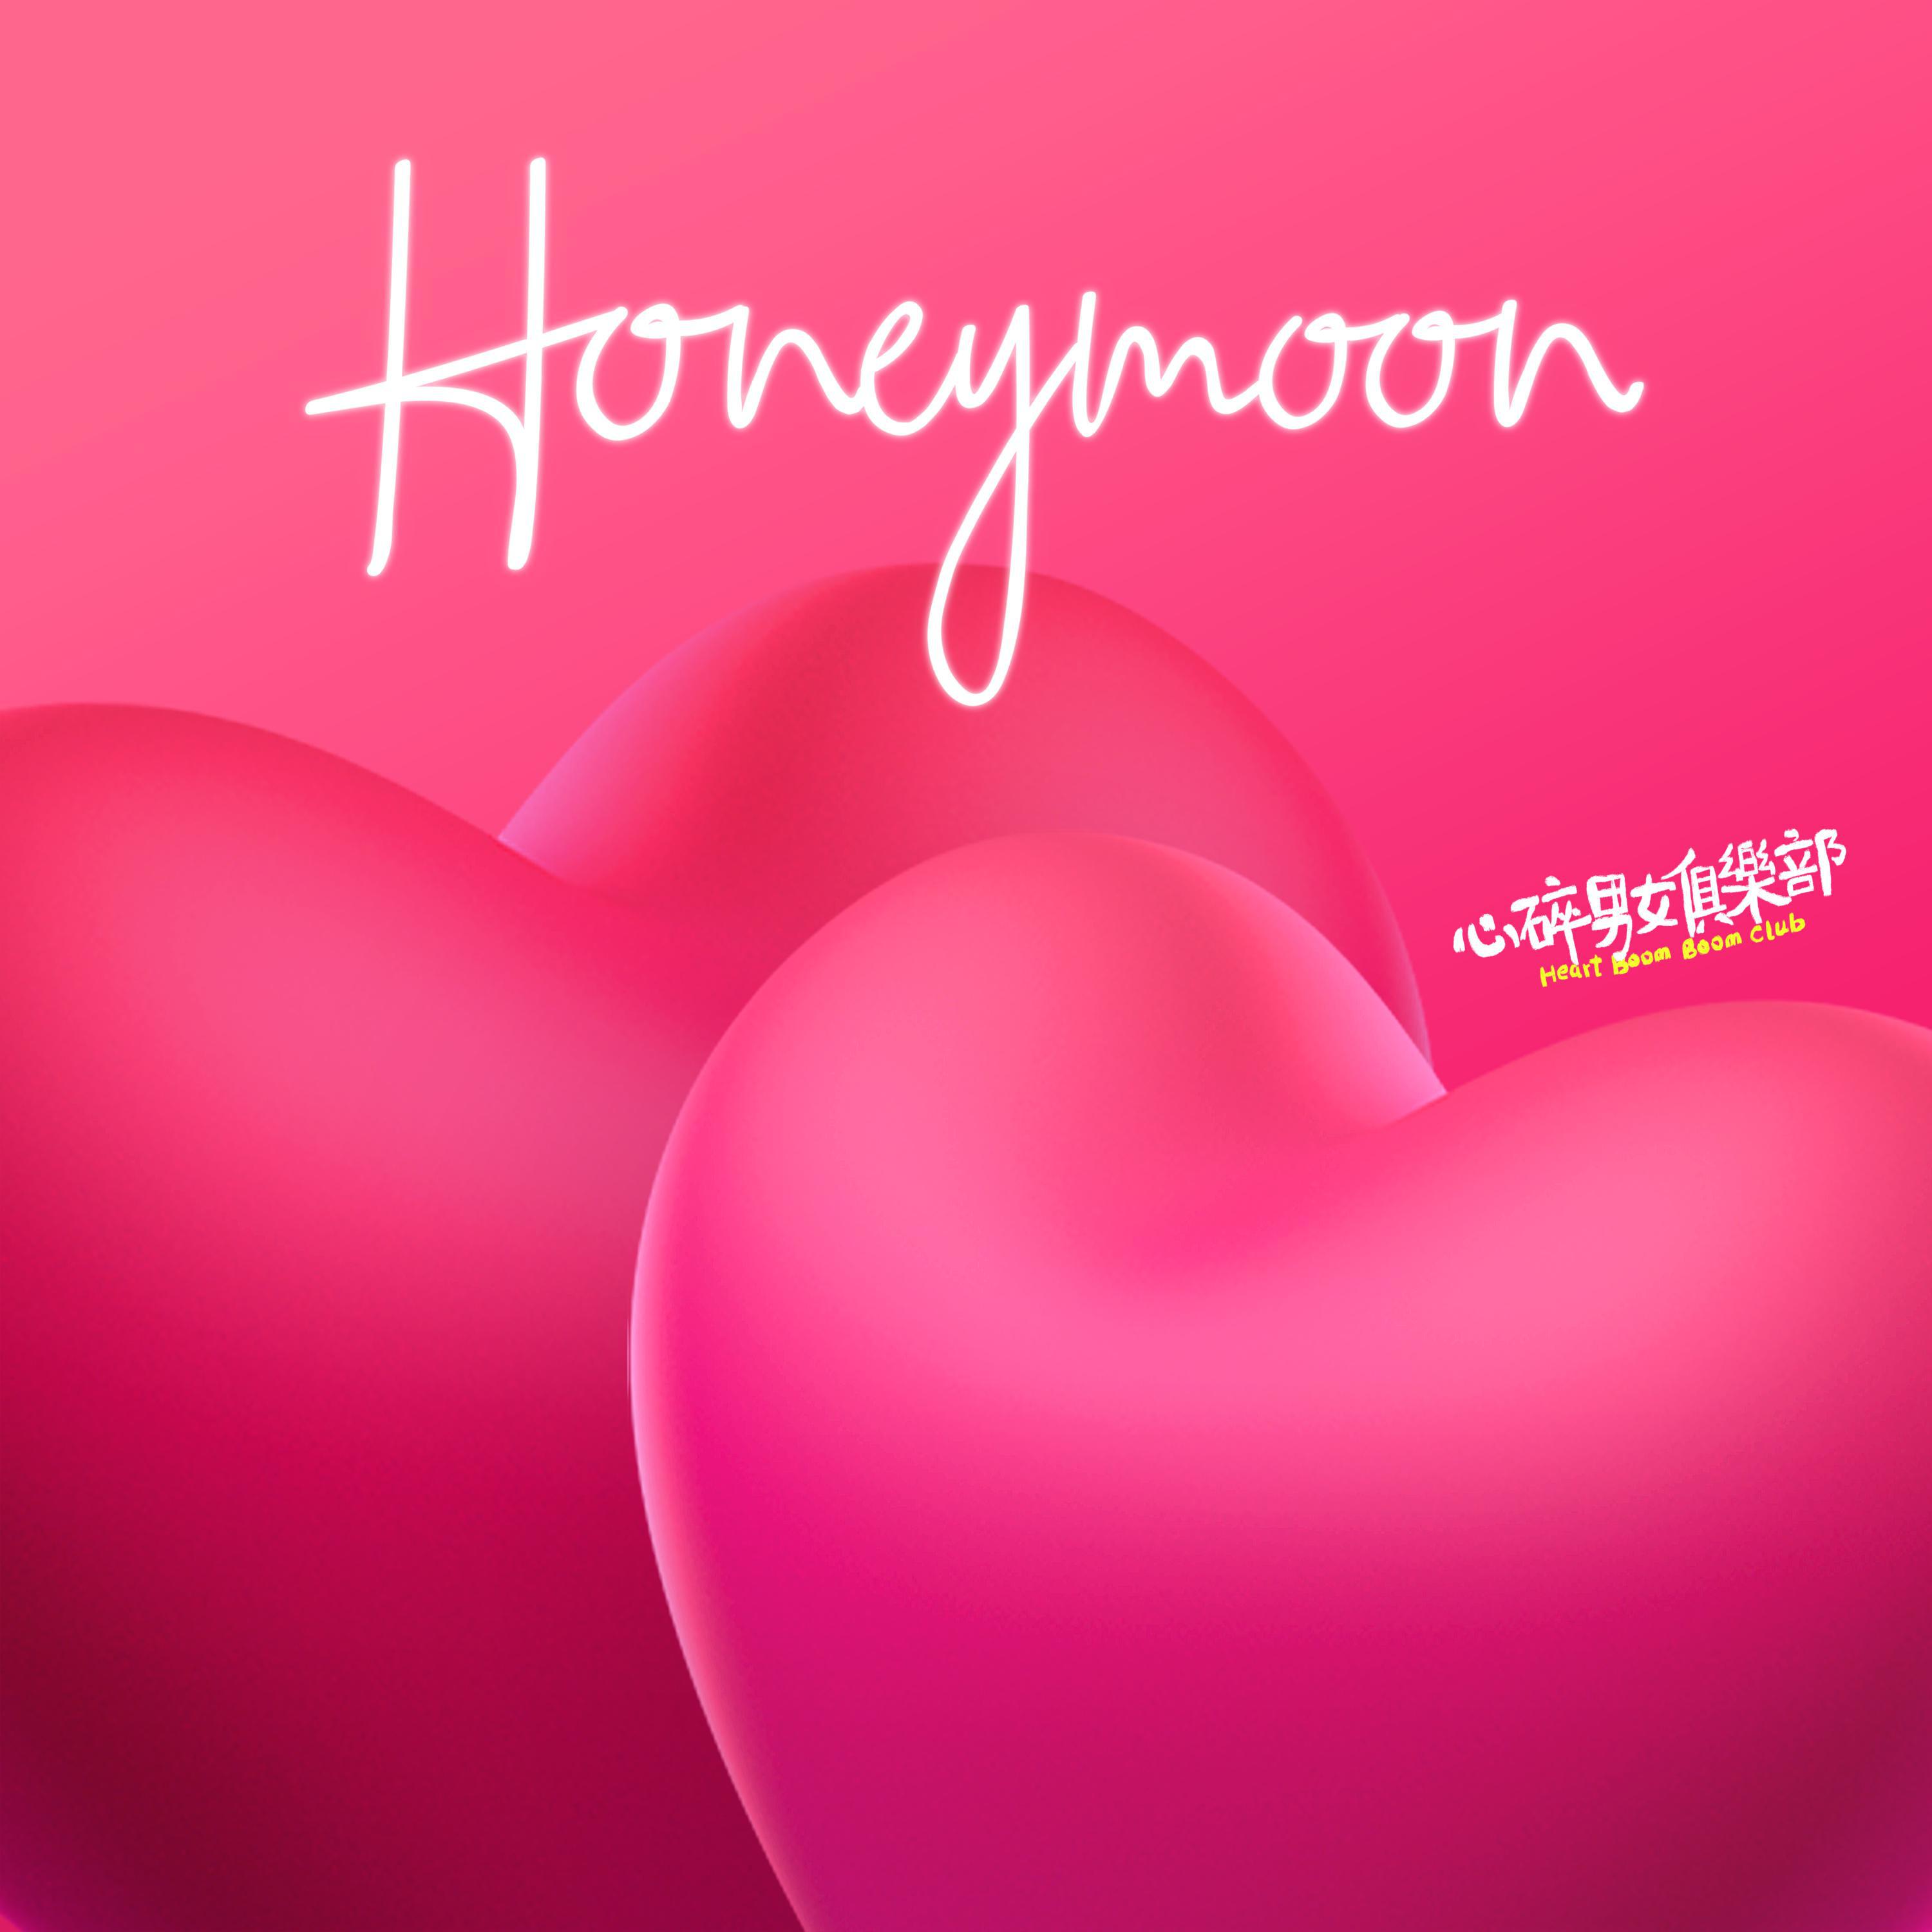 Honeymoon专辑